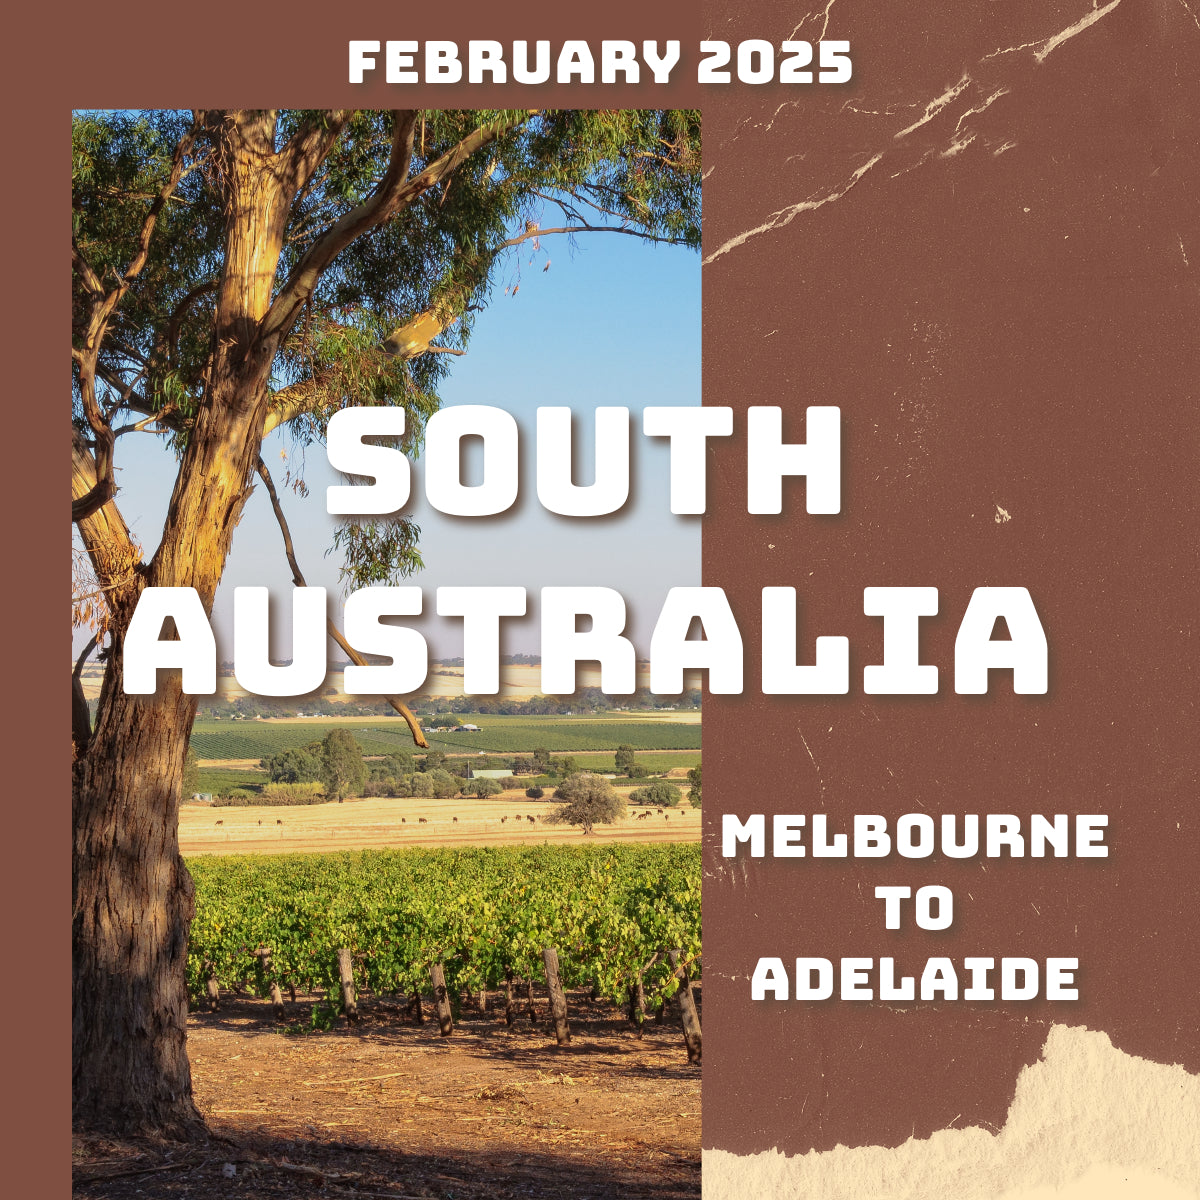 South Australia Wine and Food Tour - February 2025